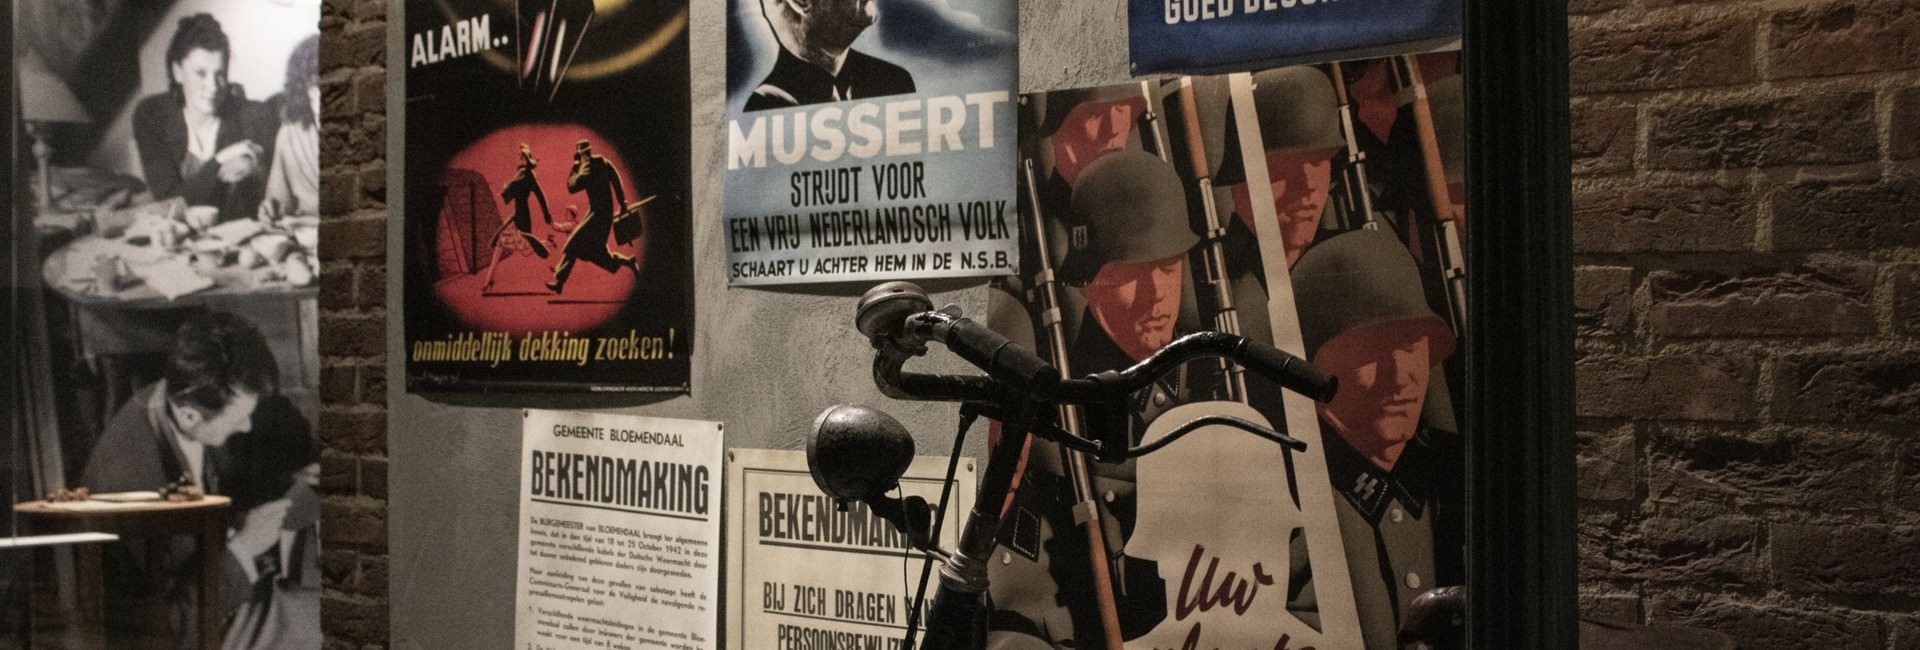 oorlogsmuseum - The Netherlands during World War II